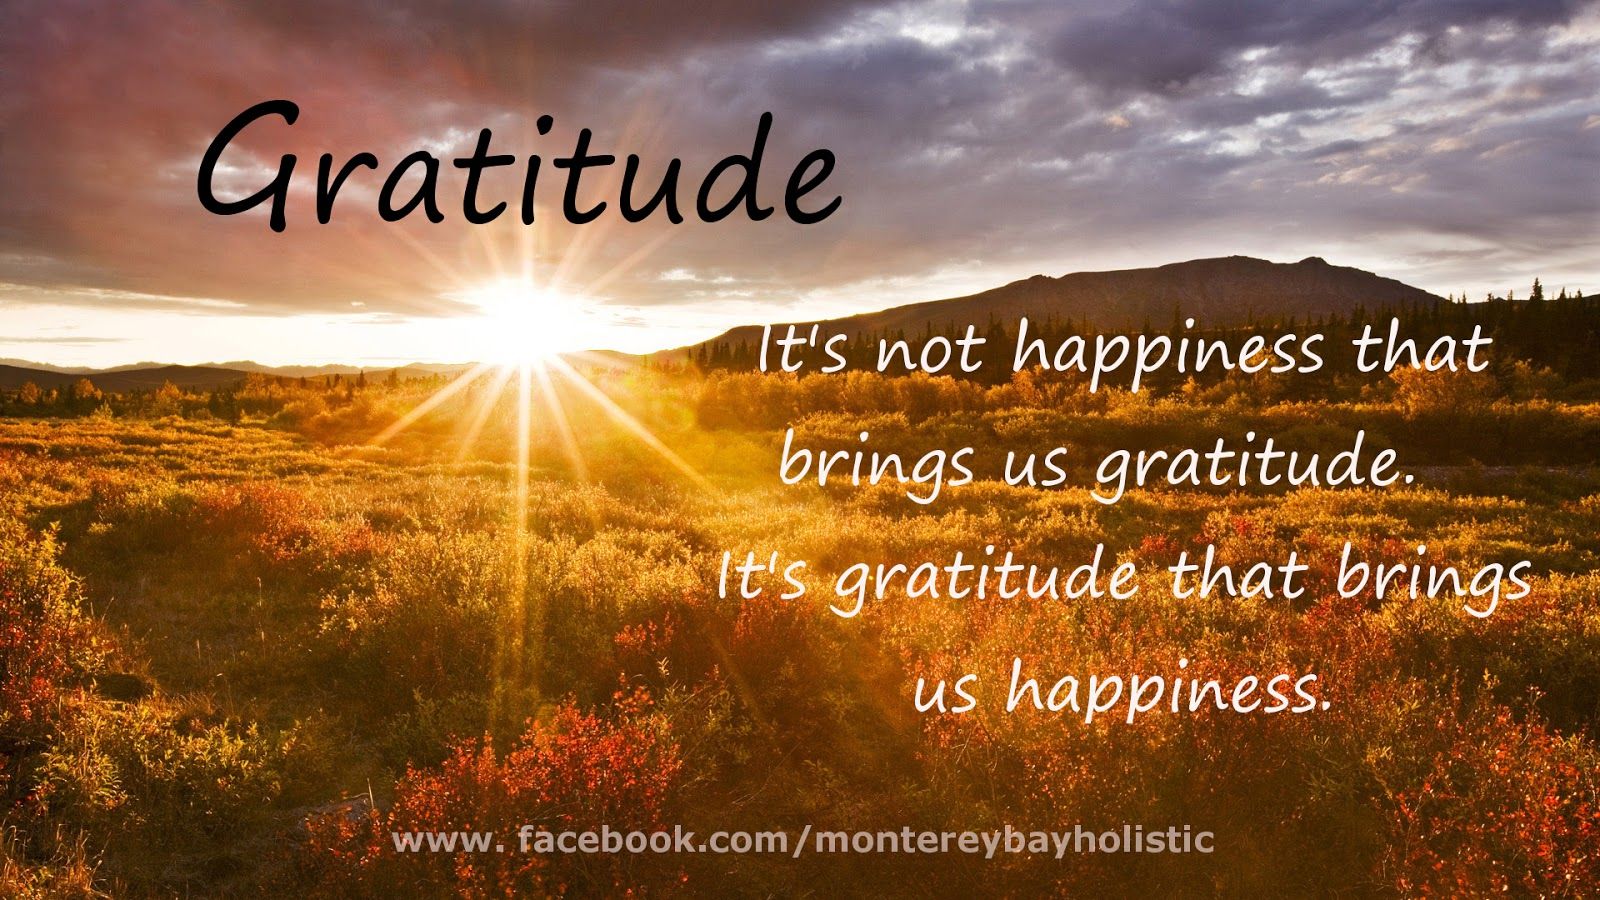 Gratitude Wallpaper